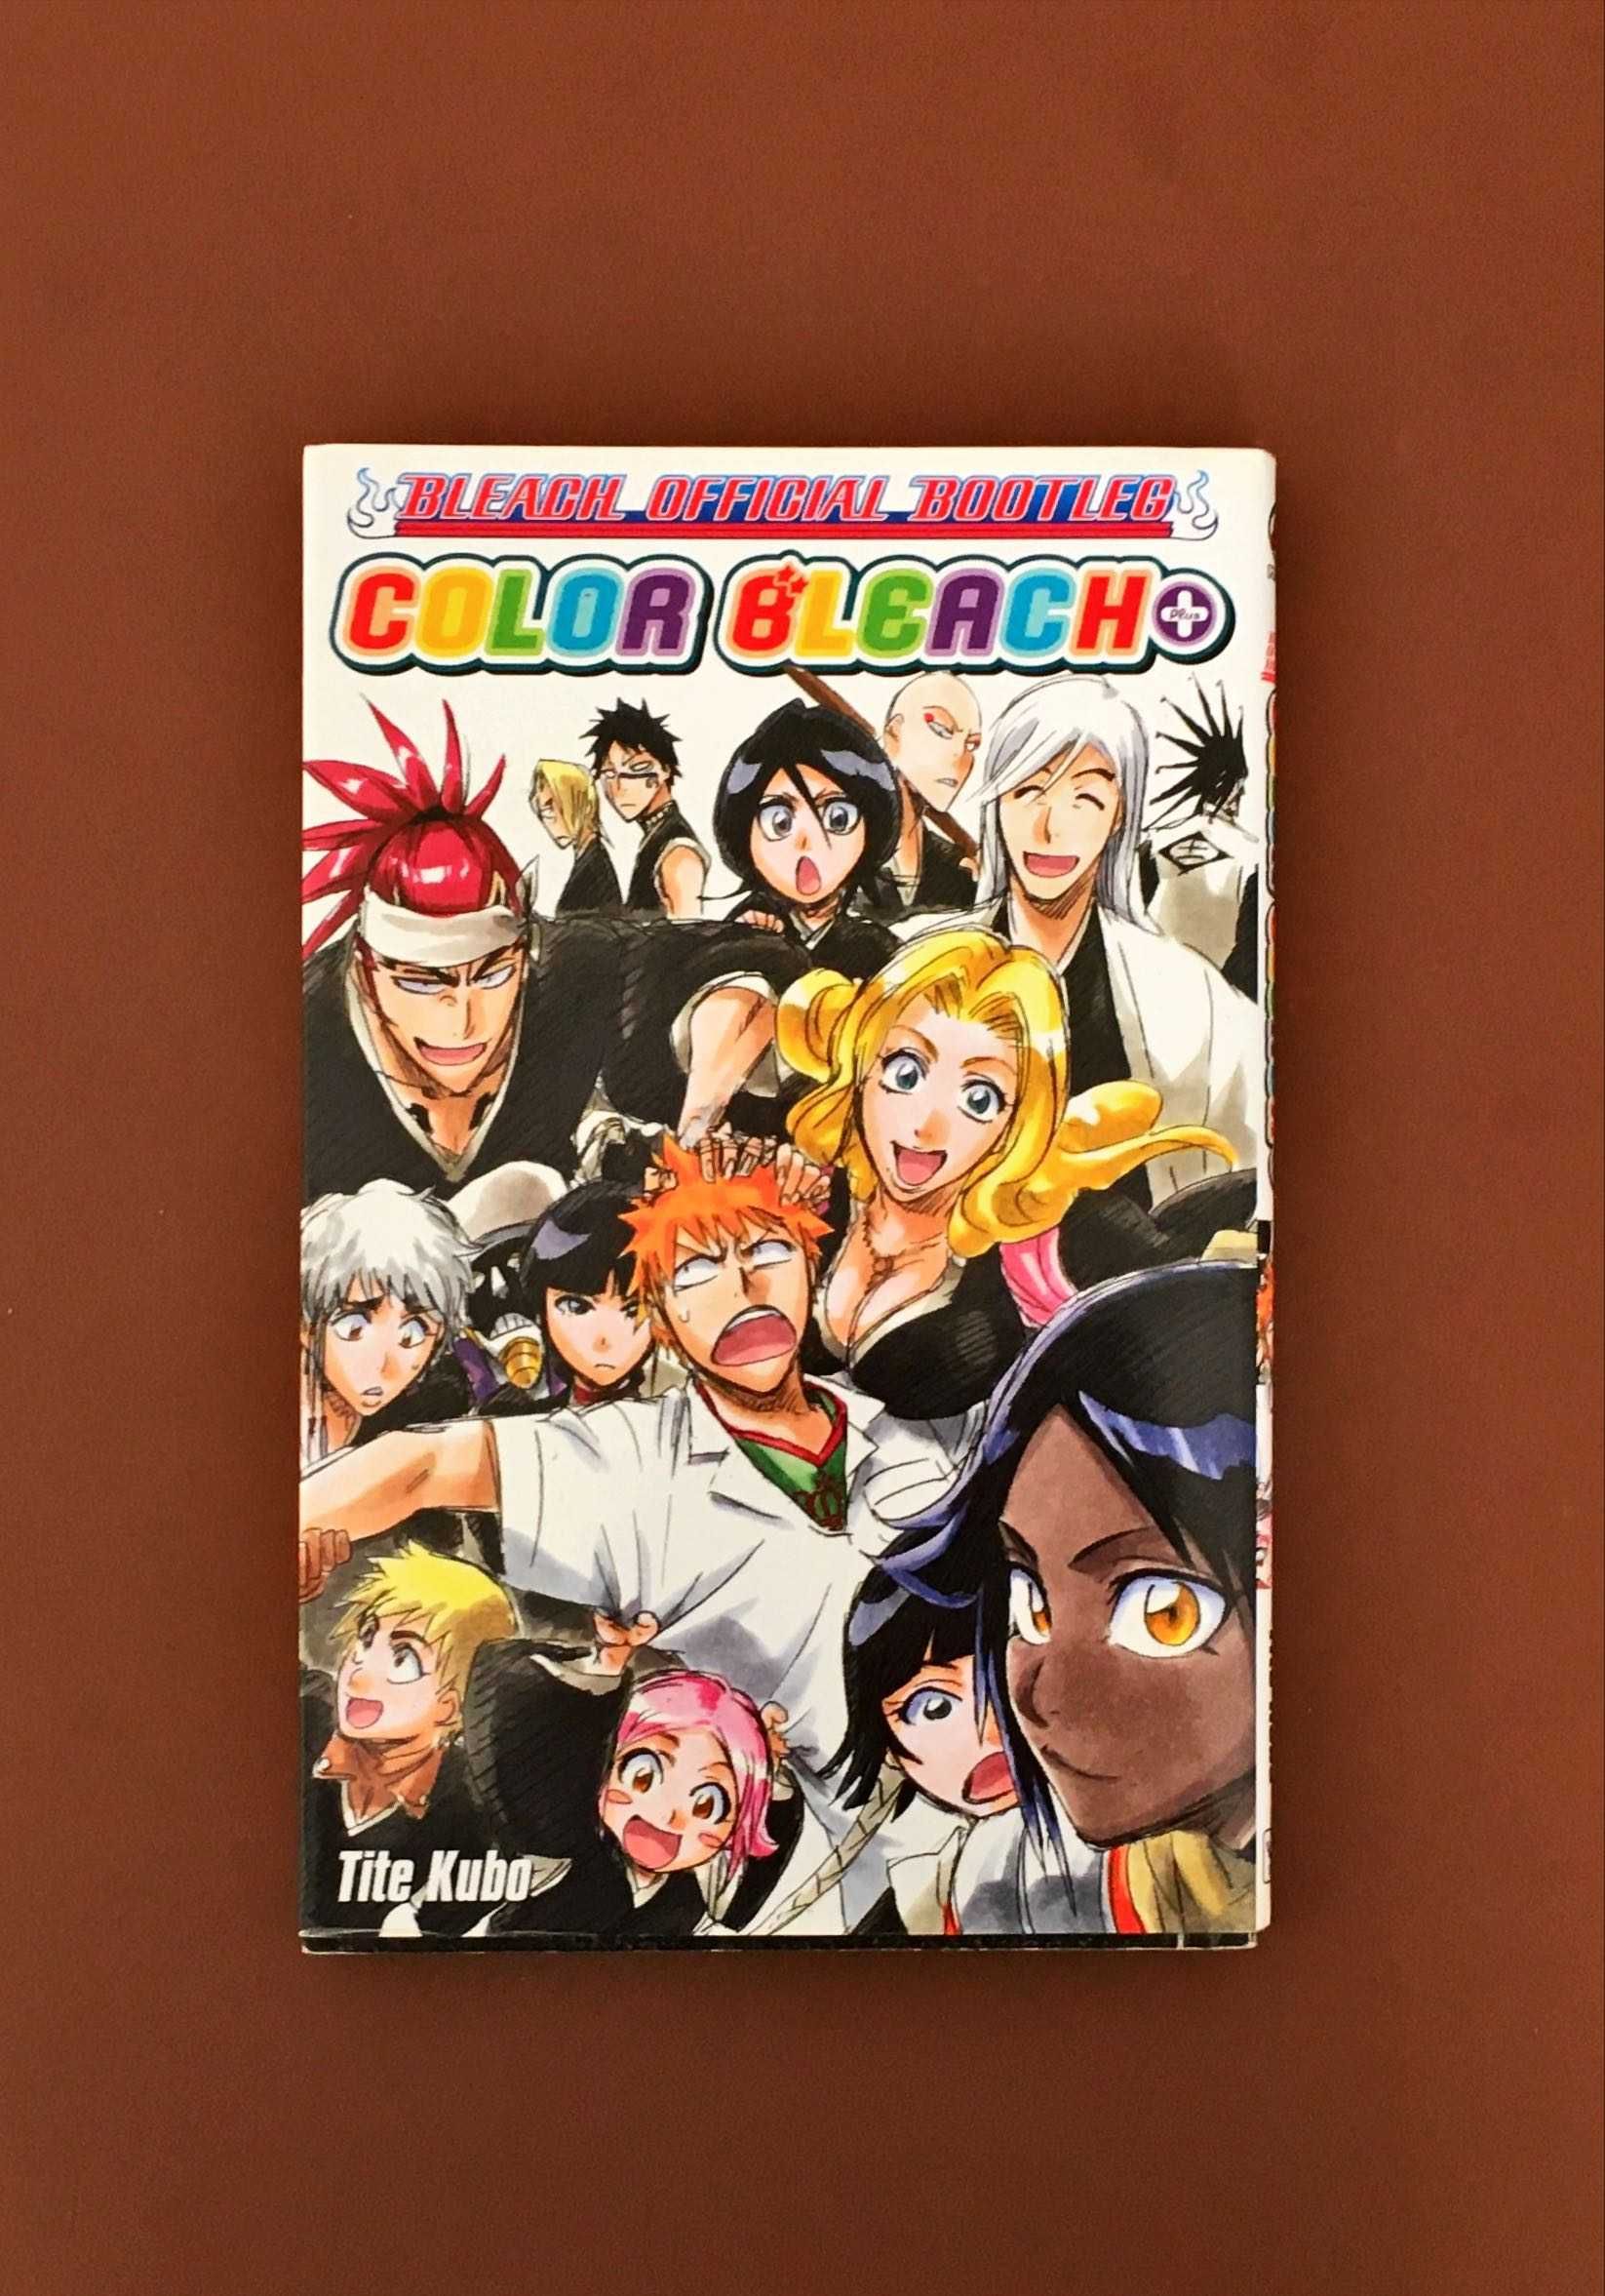 LIVRO INGLÊS FRANCÊS Comics Manga Banda Desenhada